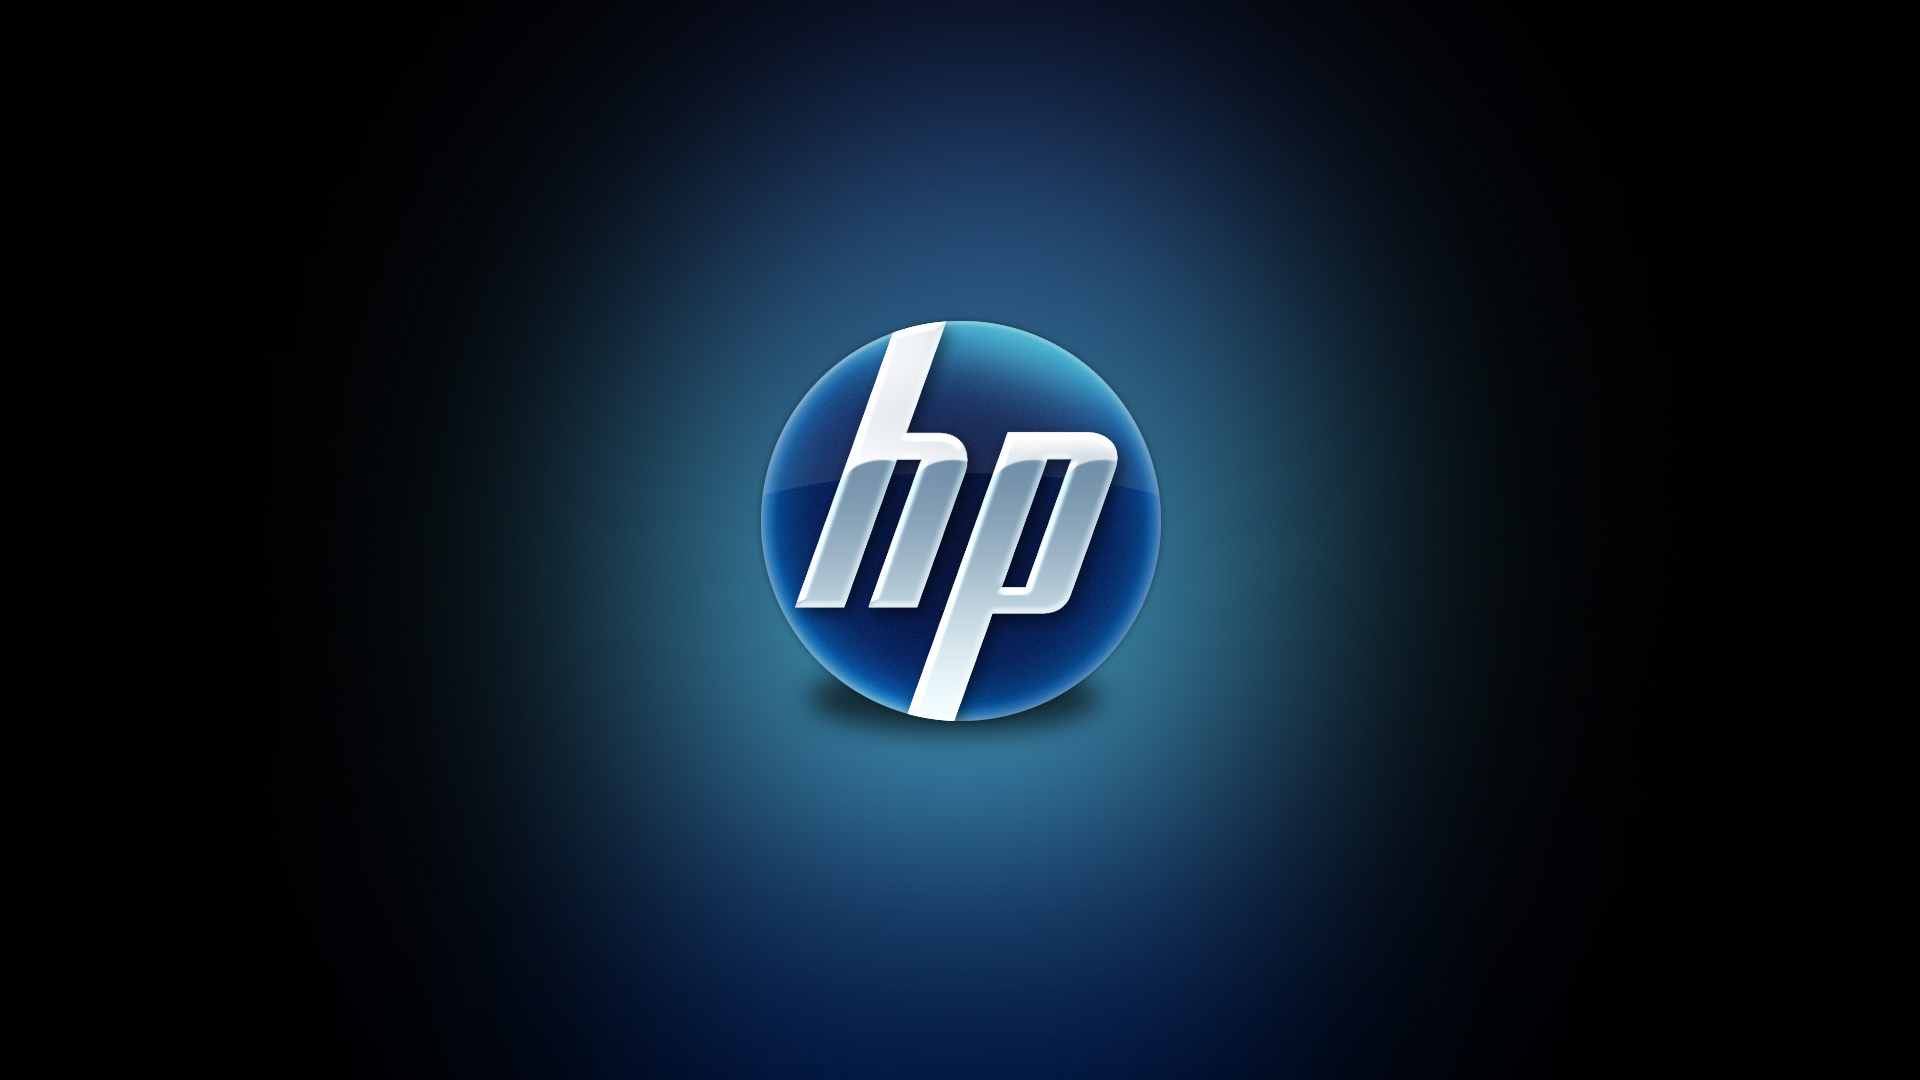  HP  Logo Wallpapers  PixelsTalk Net